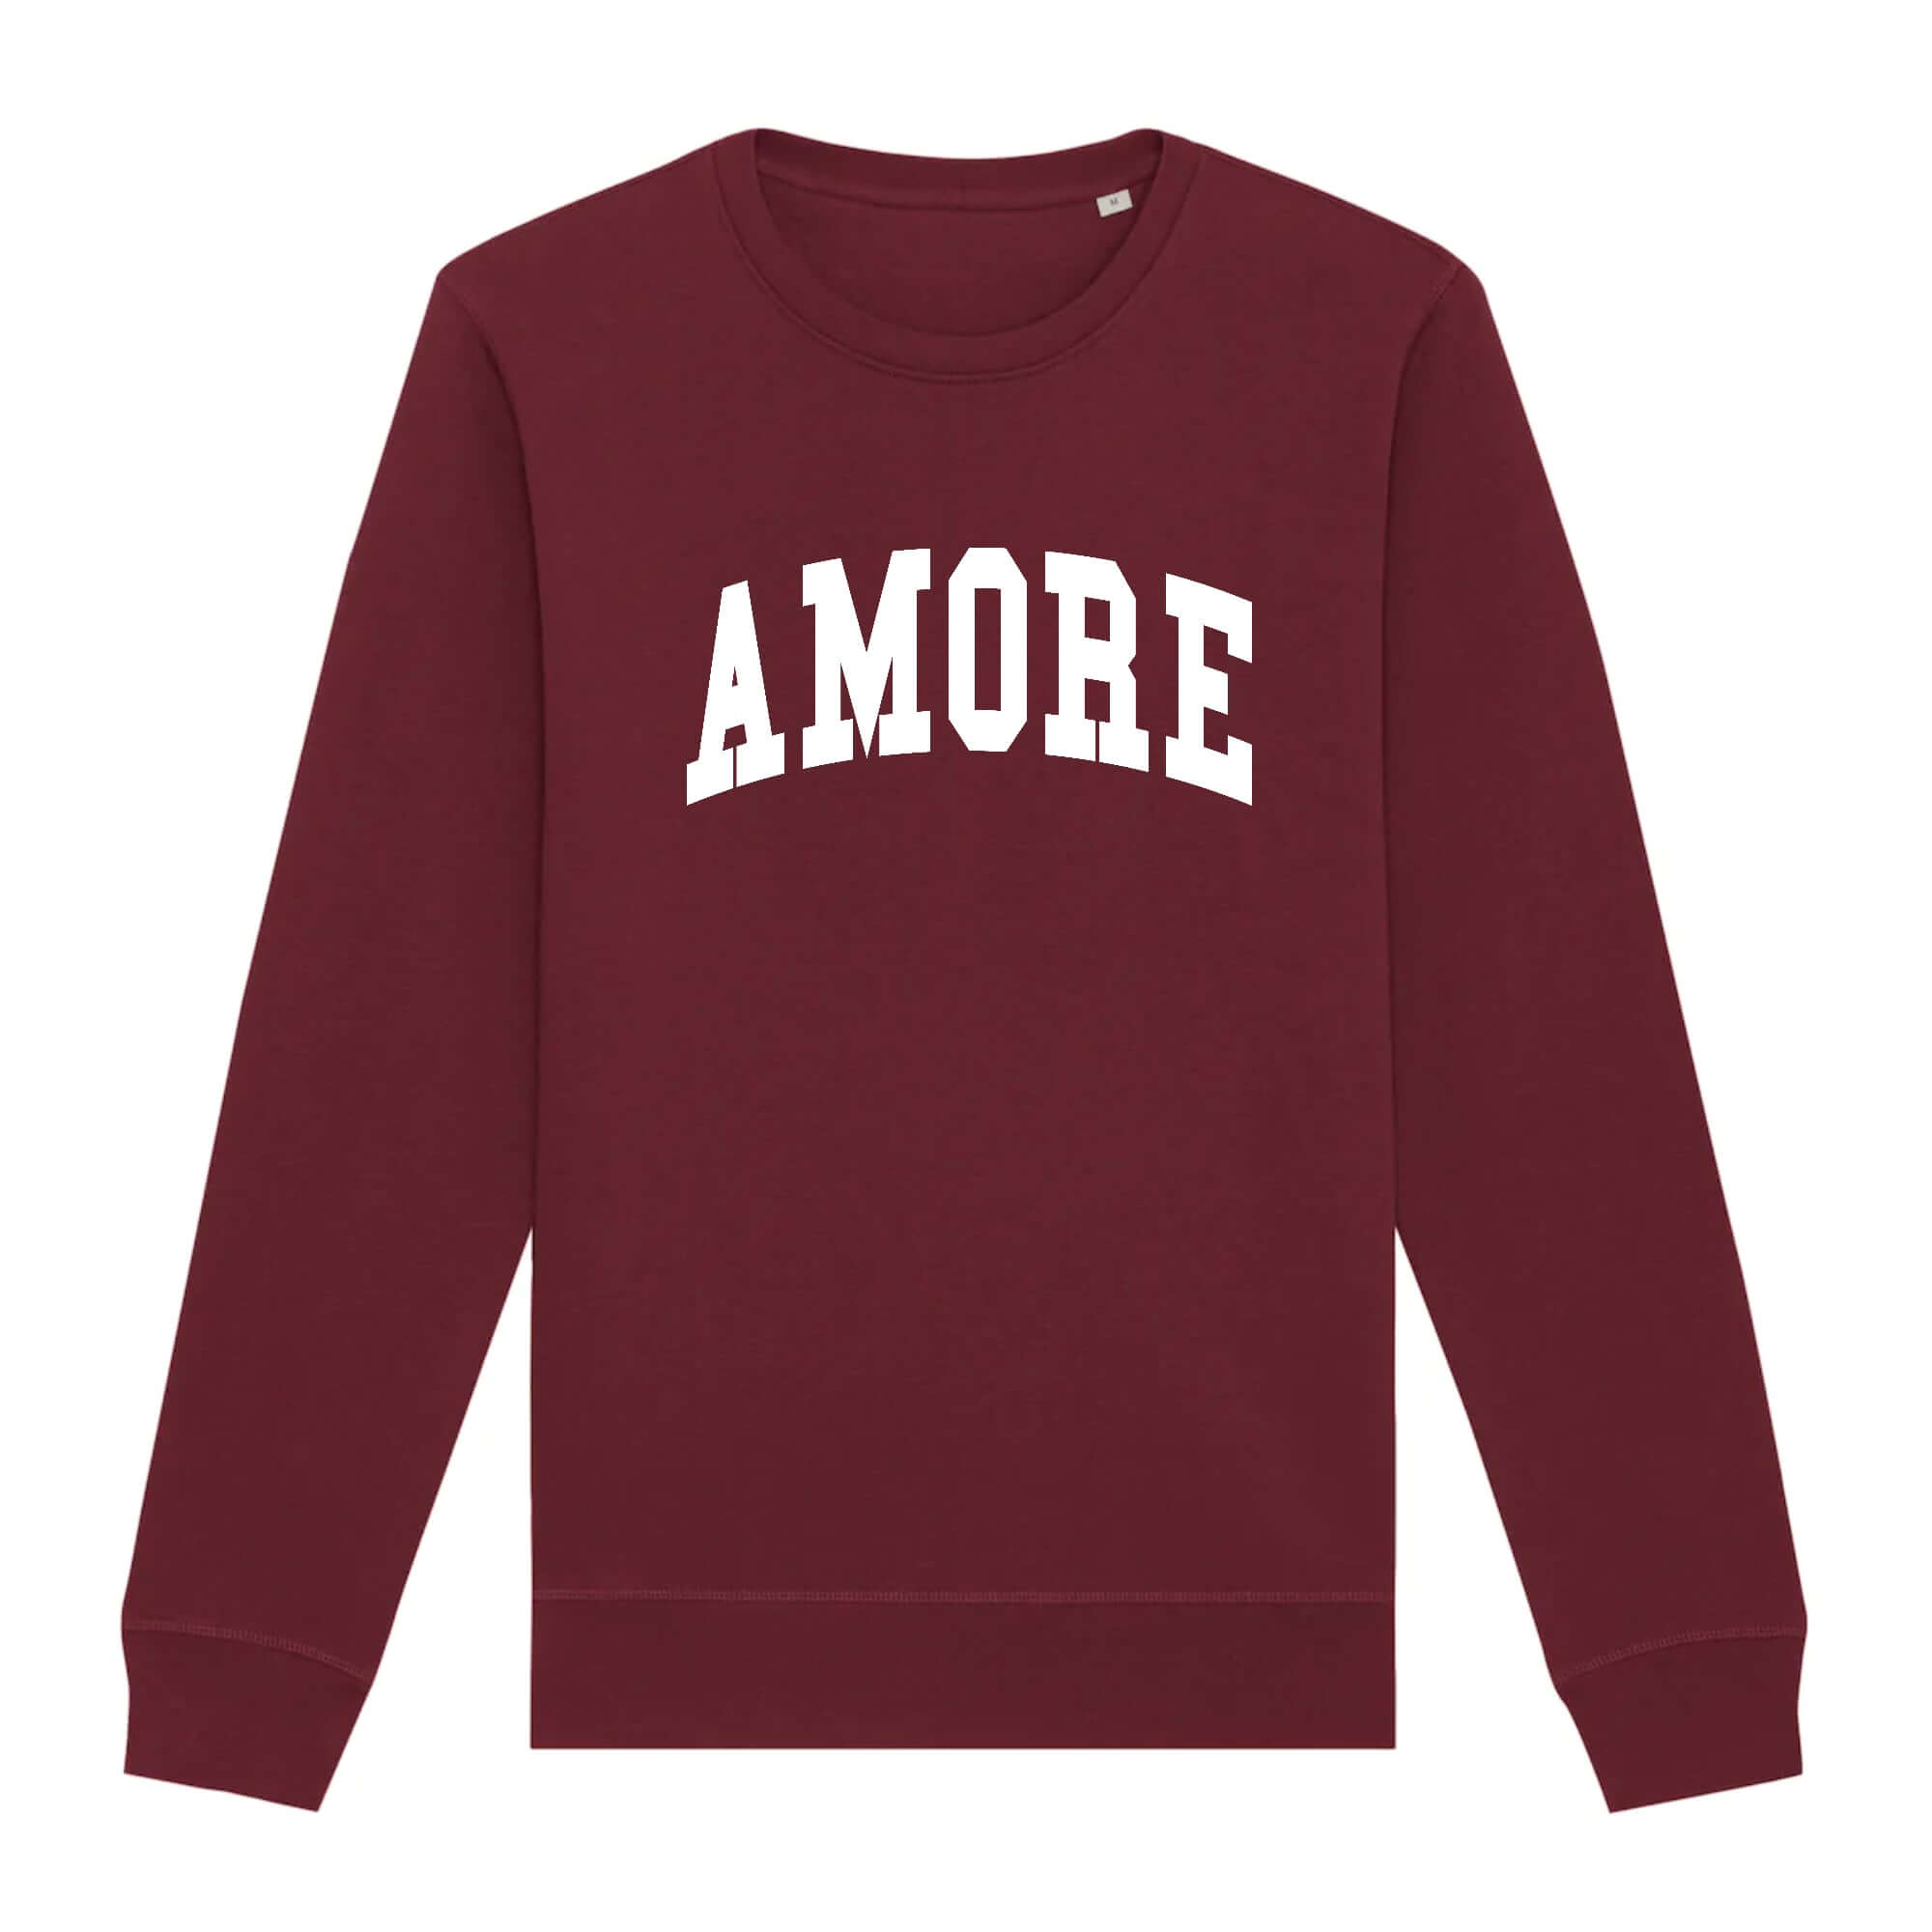 Amore - Organic Sweatshirt - The Refined Spirit